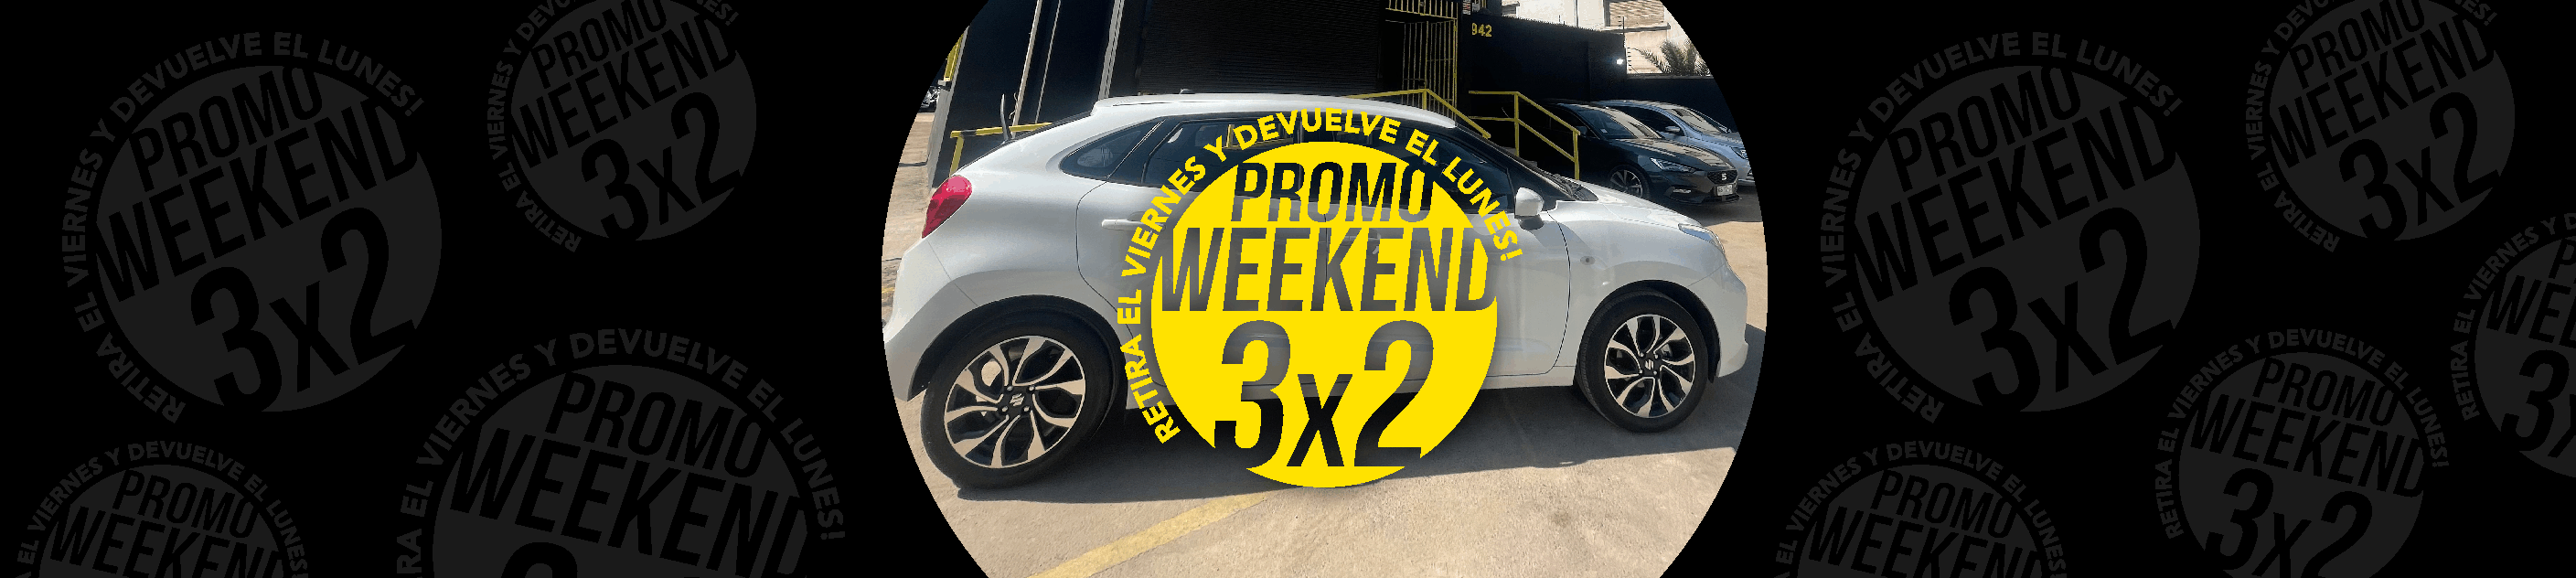 Promo Weekend 3x2